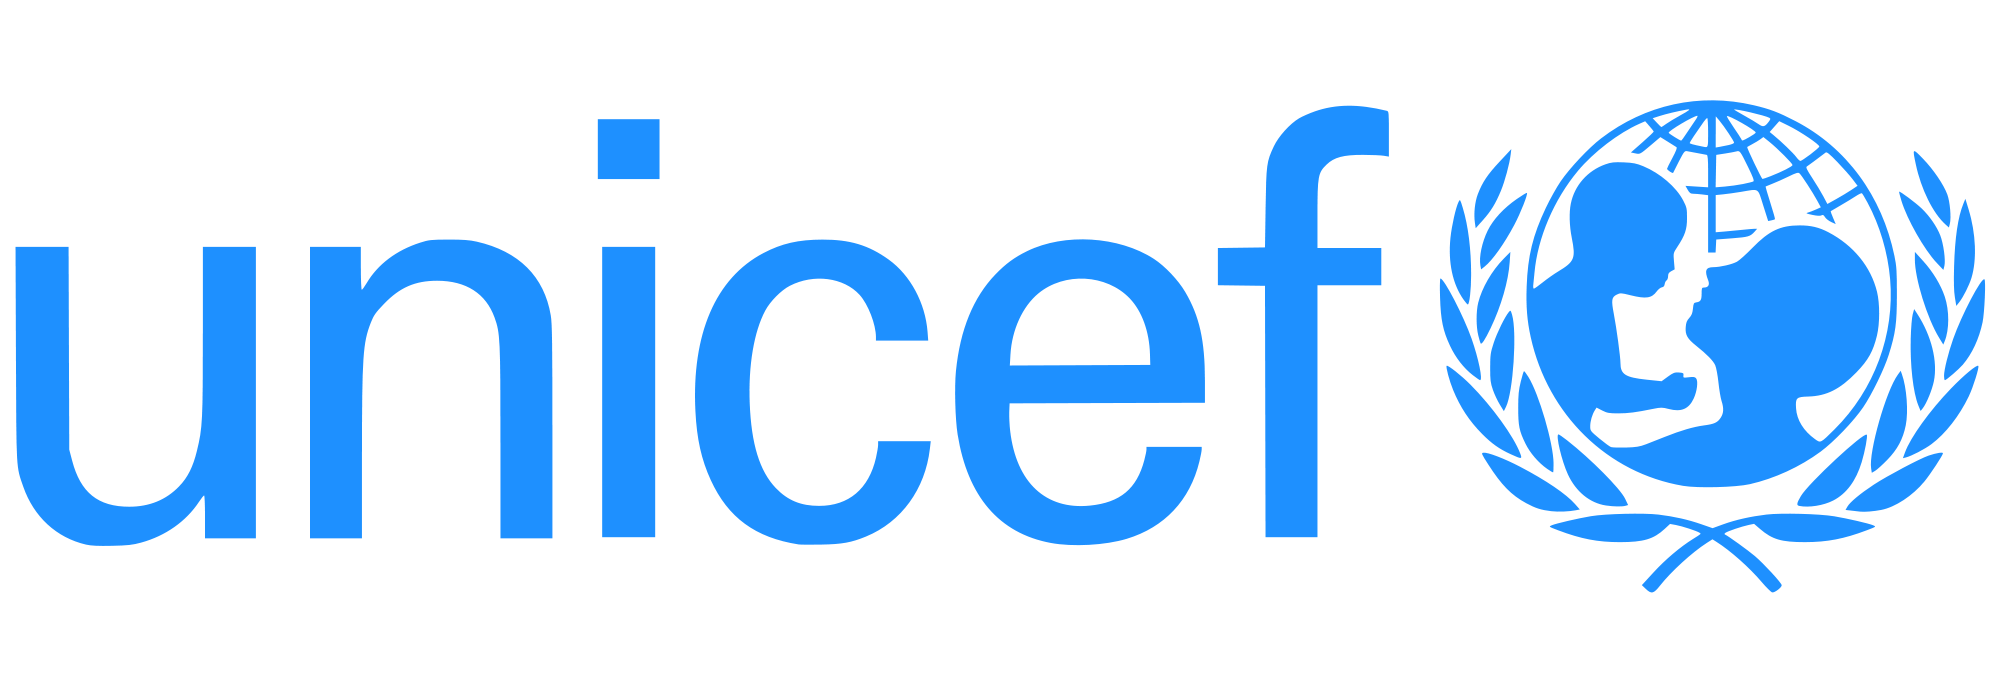 UNICEF-Logo.png